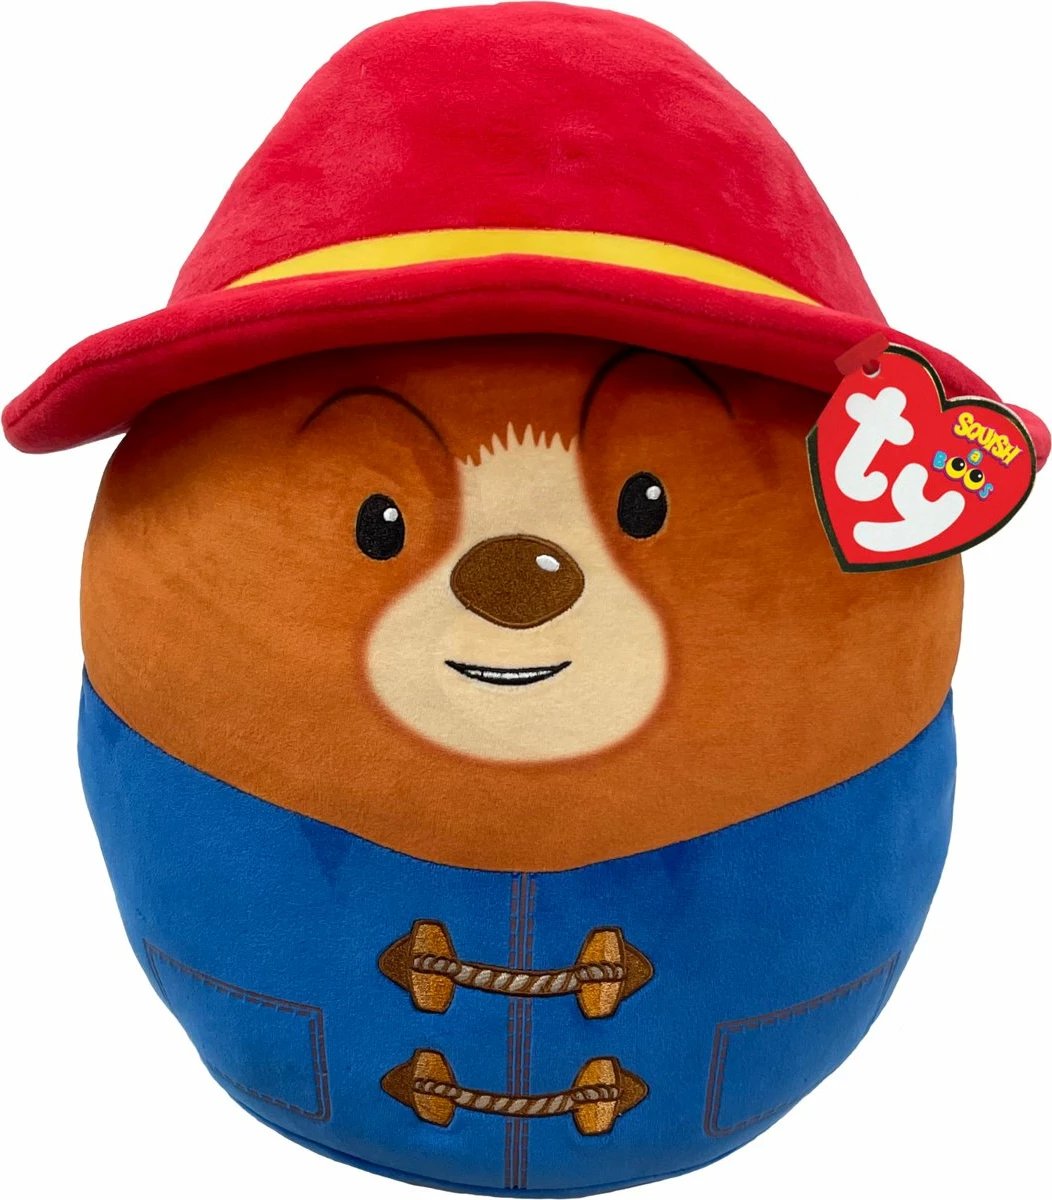 Ty Squish-a-Boos - Paddington Bear 25cm Soft Toy